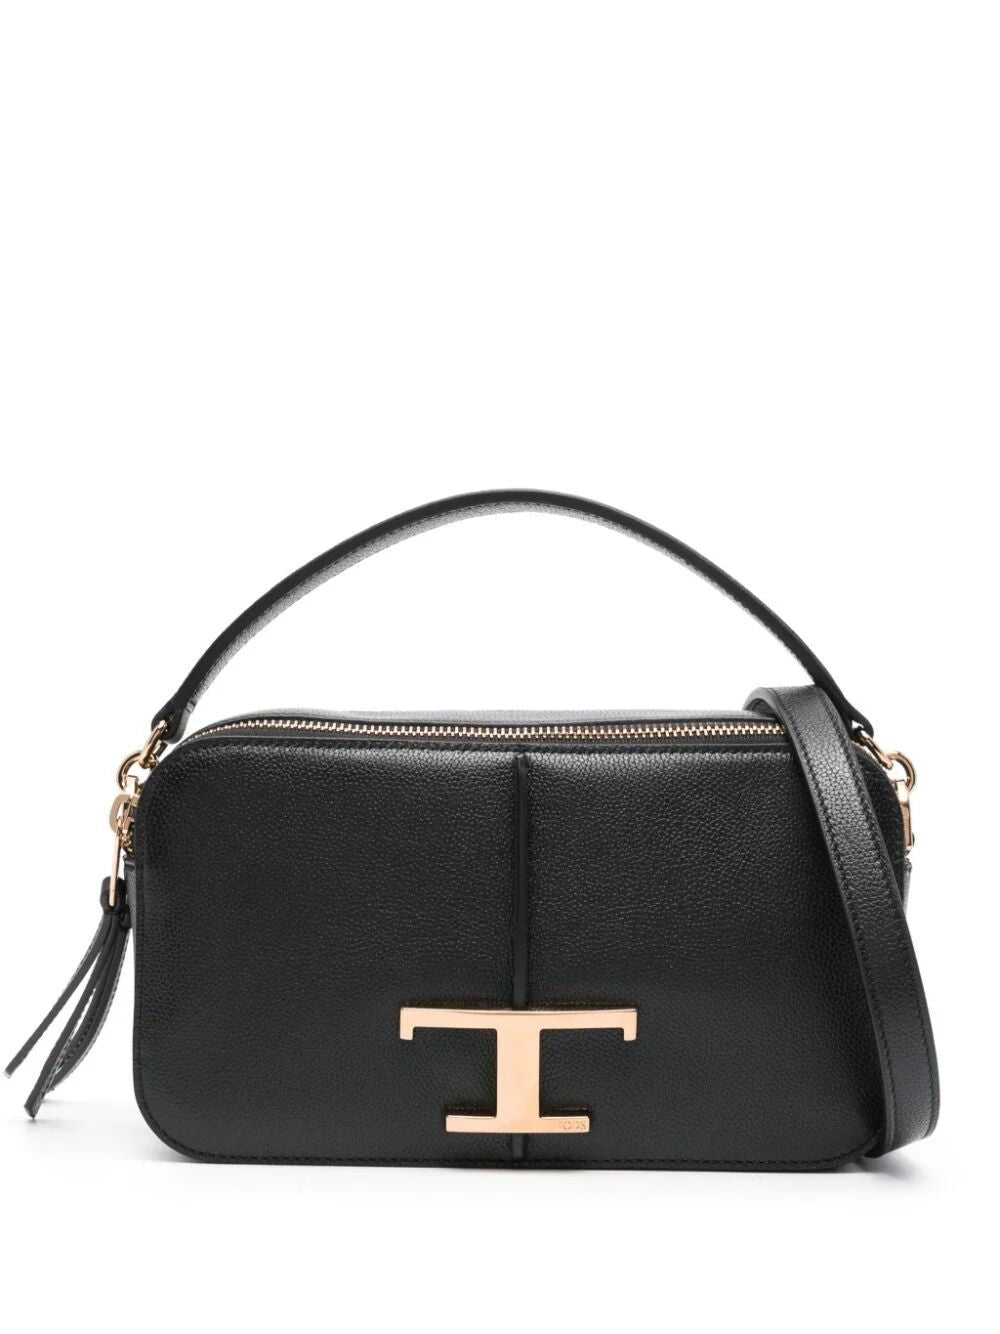 Chic Black Leather Mini Camera Handbag with Shoulder & Crossbody Straps